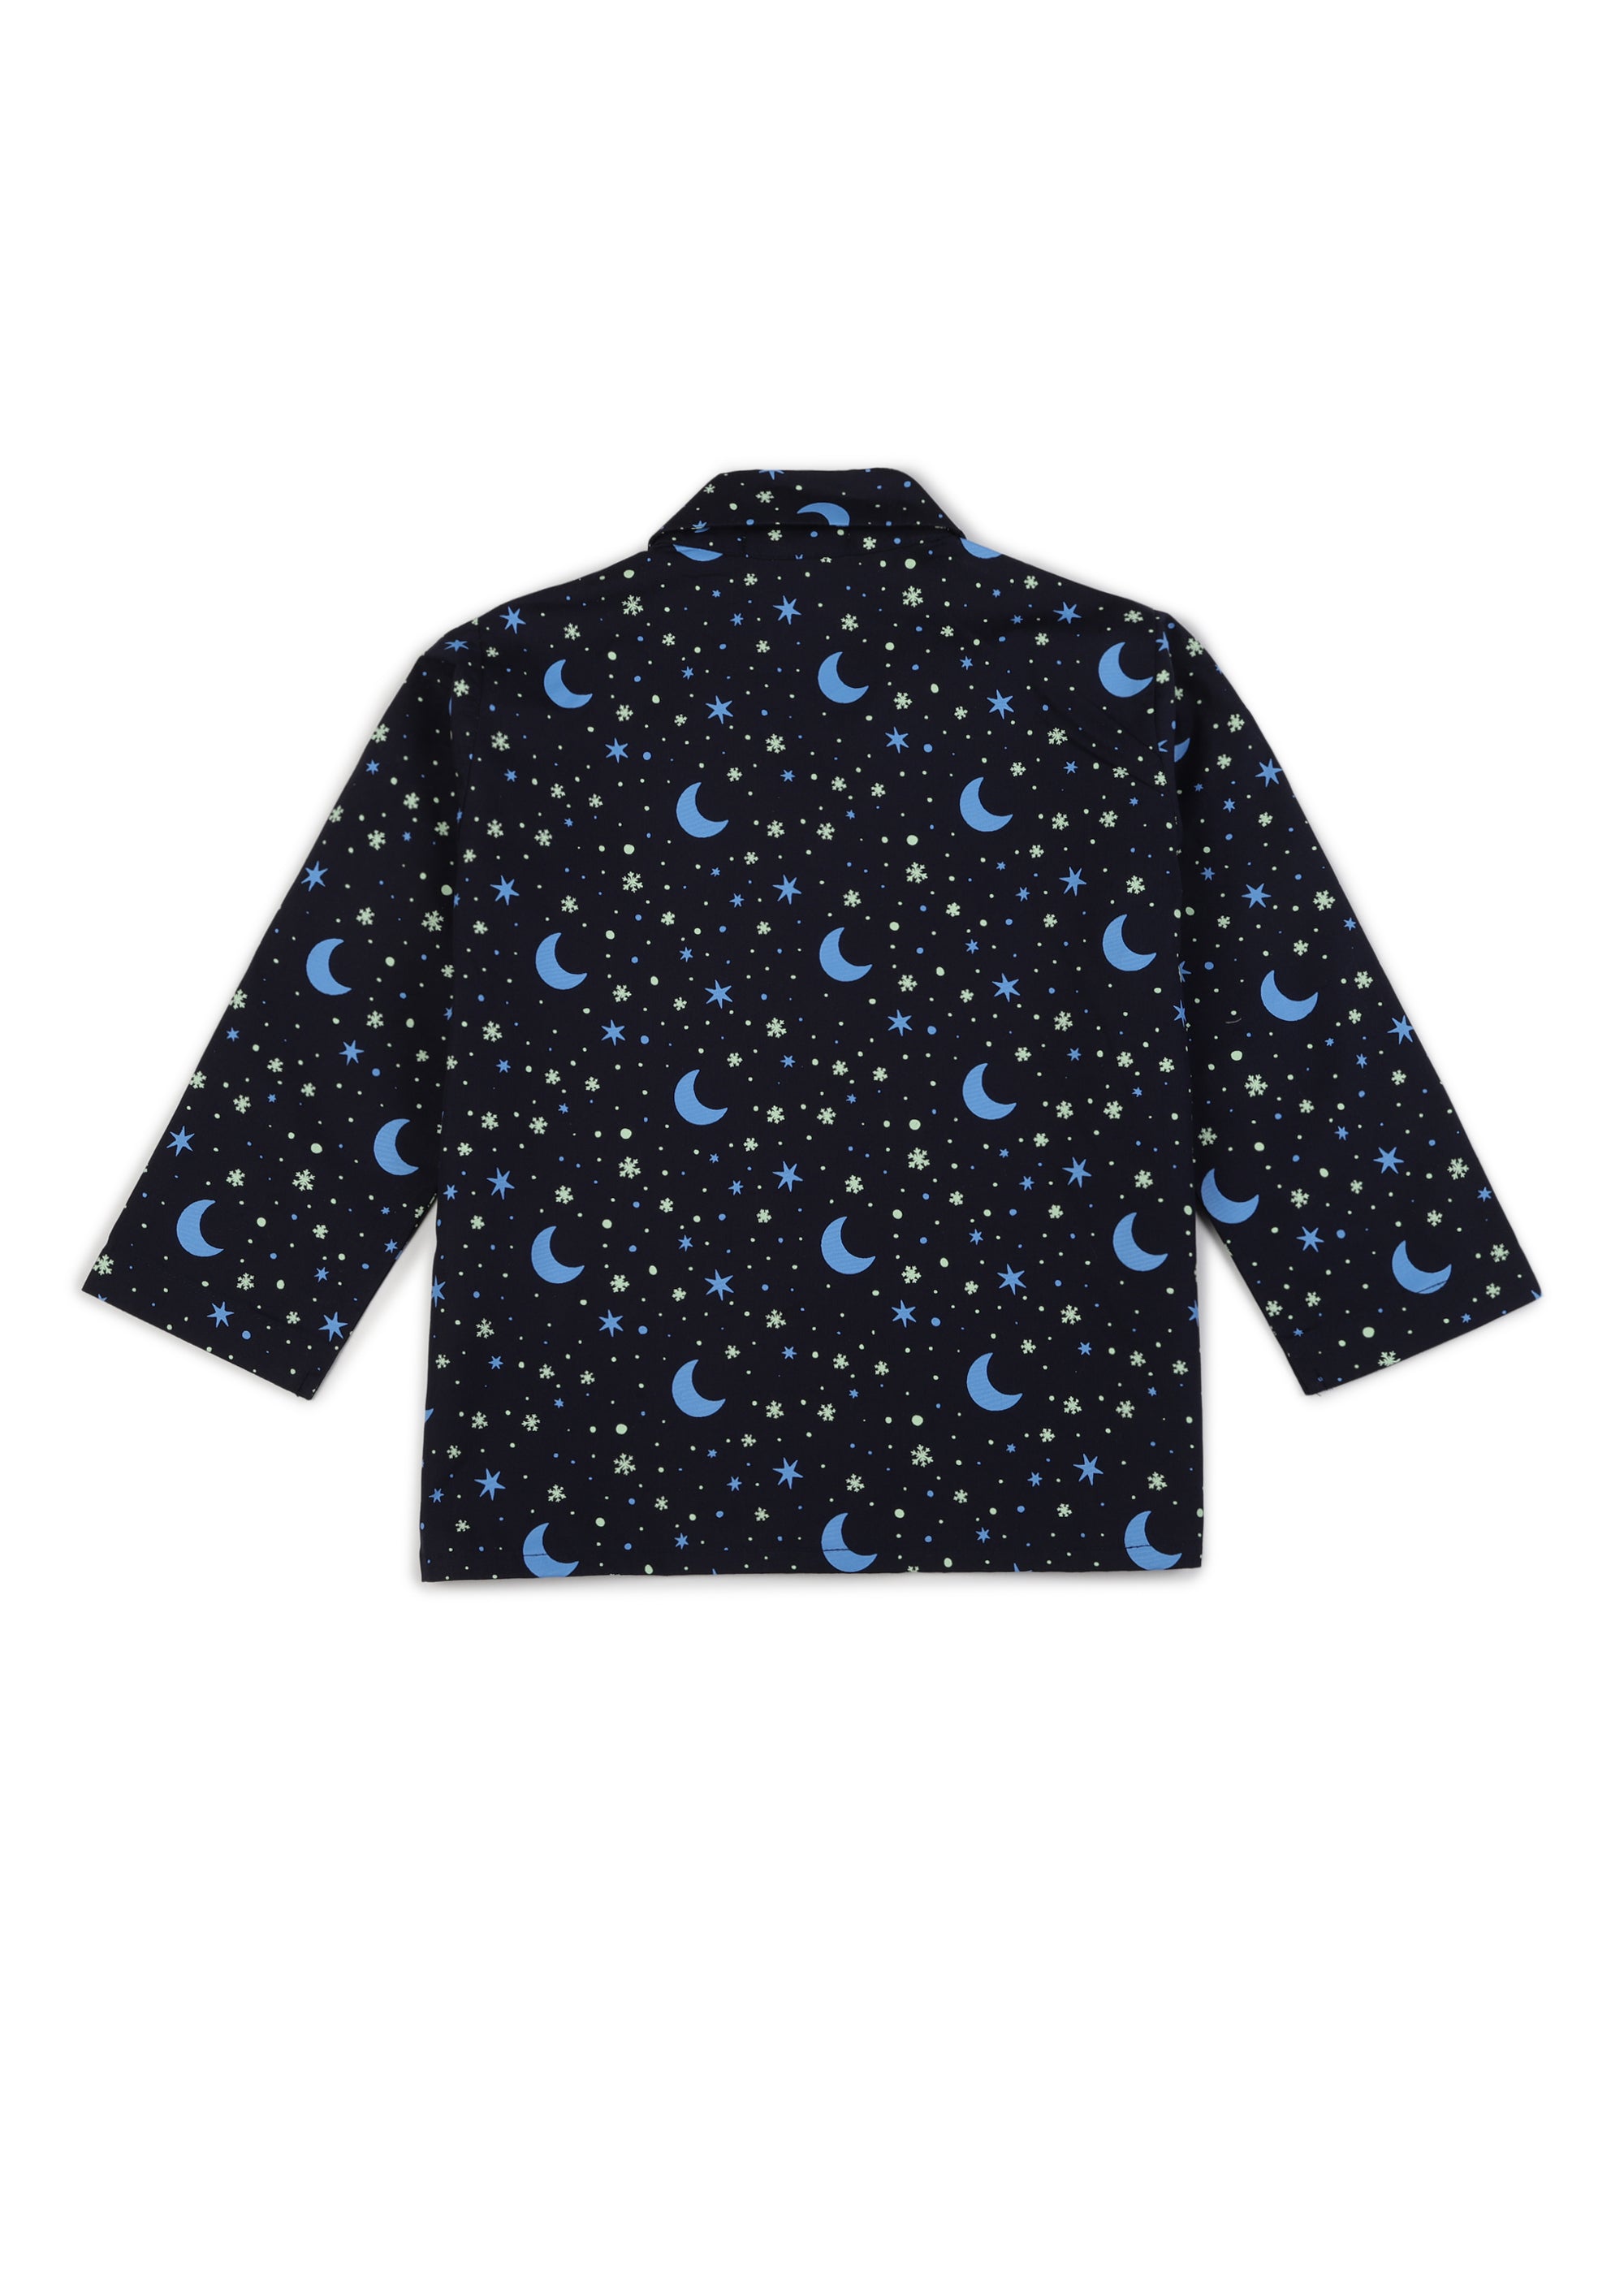 Star And Moon Glow In The Dark Print Navy Long Sleeve Kids Night Suit